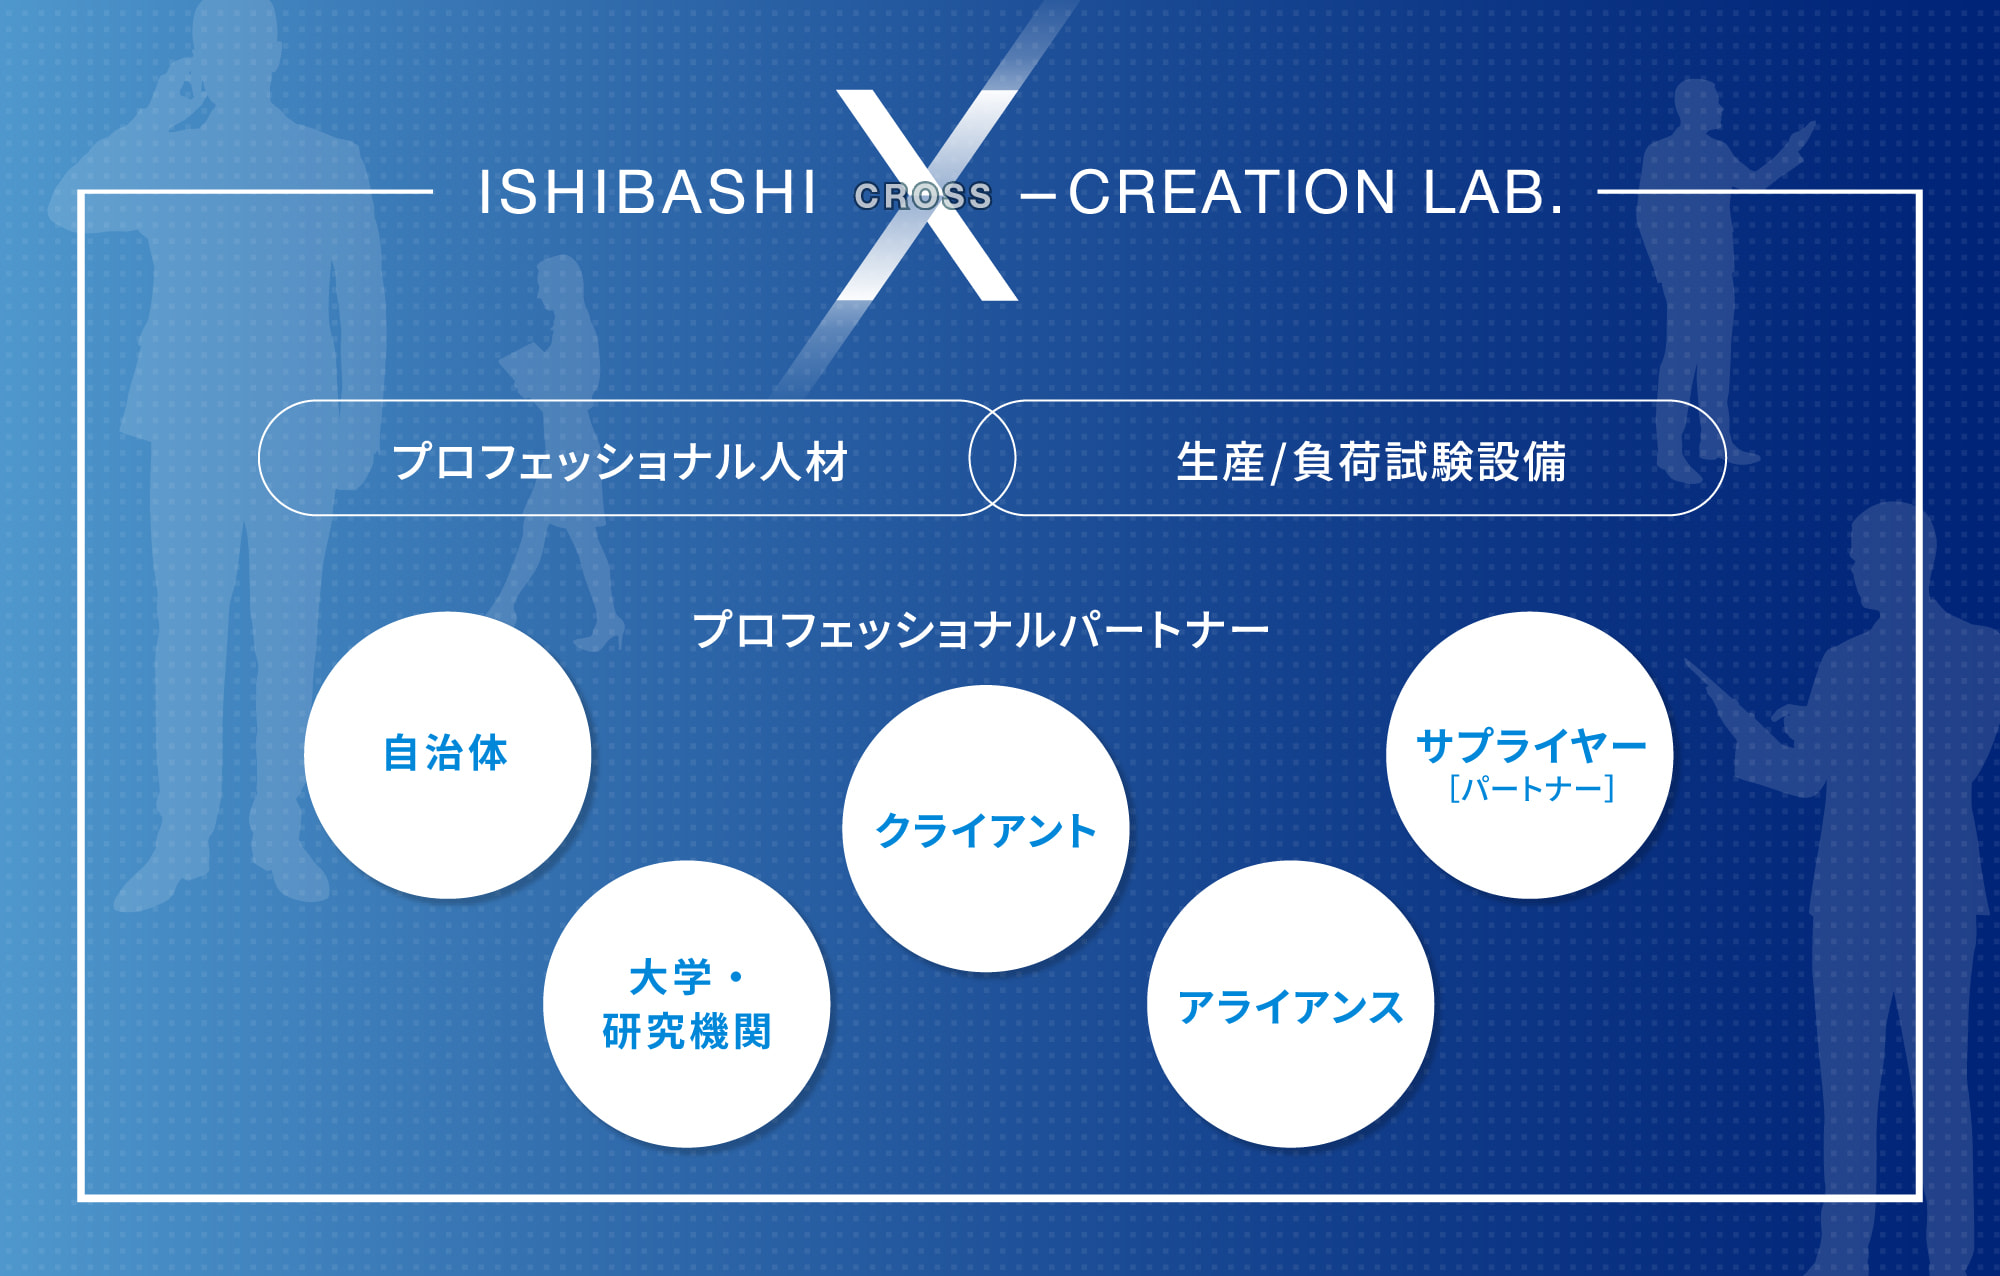 ISHIBASHI X-CREATION LAB.プロフェッショナル人材、生産/負荷試験設備、プロフェッショナルパートナー、自治体、大学・研究機関、クライアント、アライアンス、サプライヤー［パートナー］